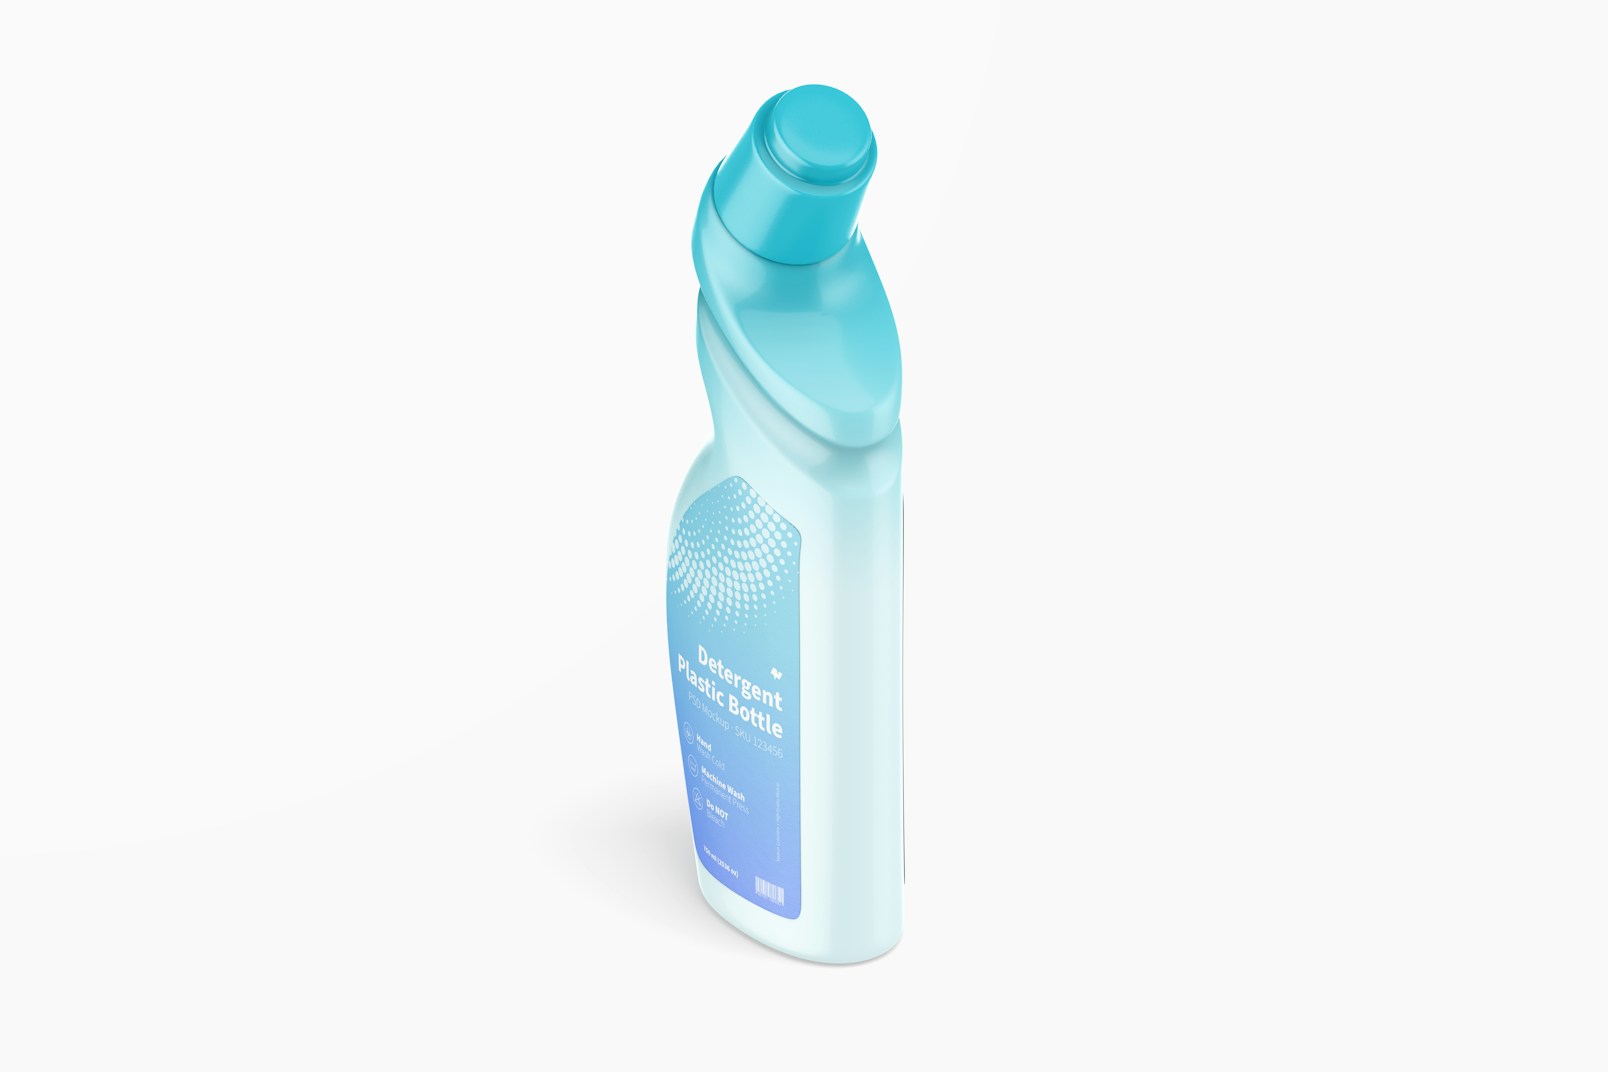 Detergent Plastic Bottle Mockup, Isometric Left View